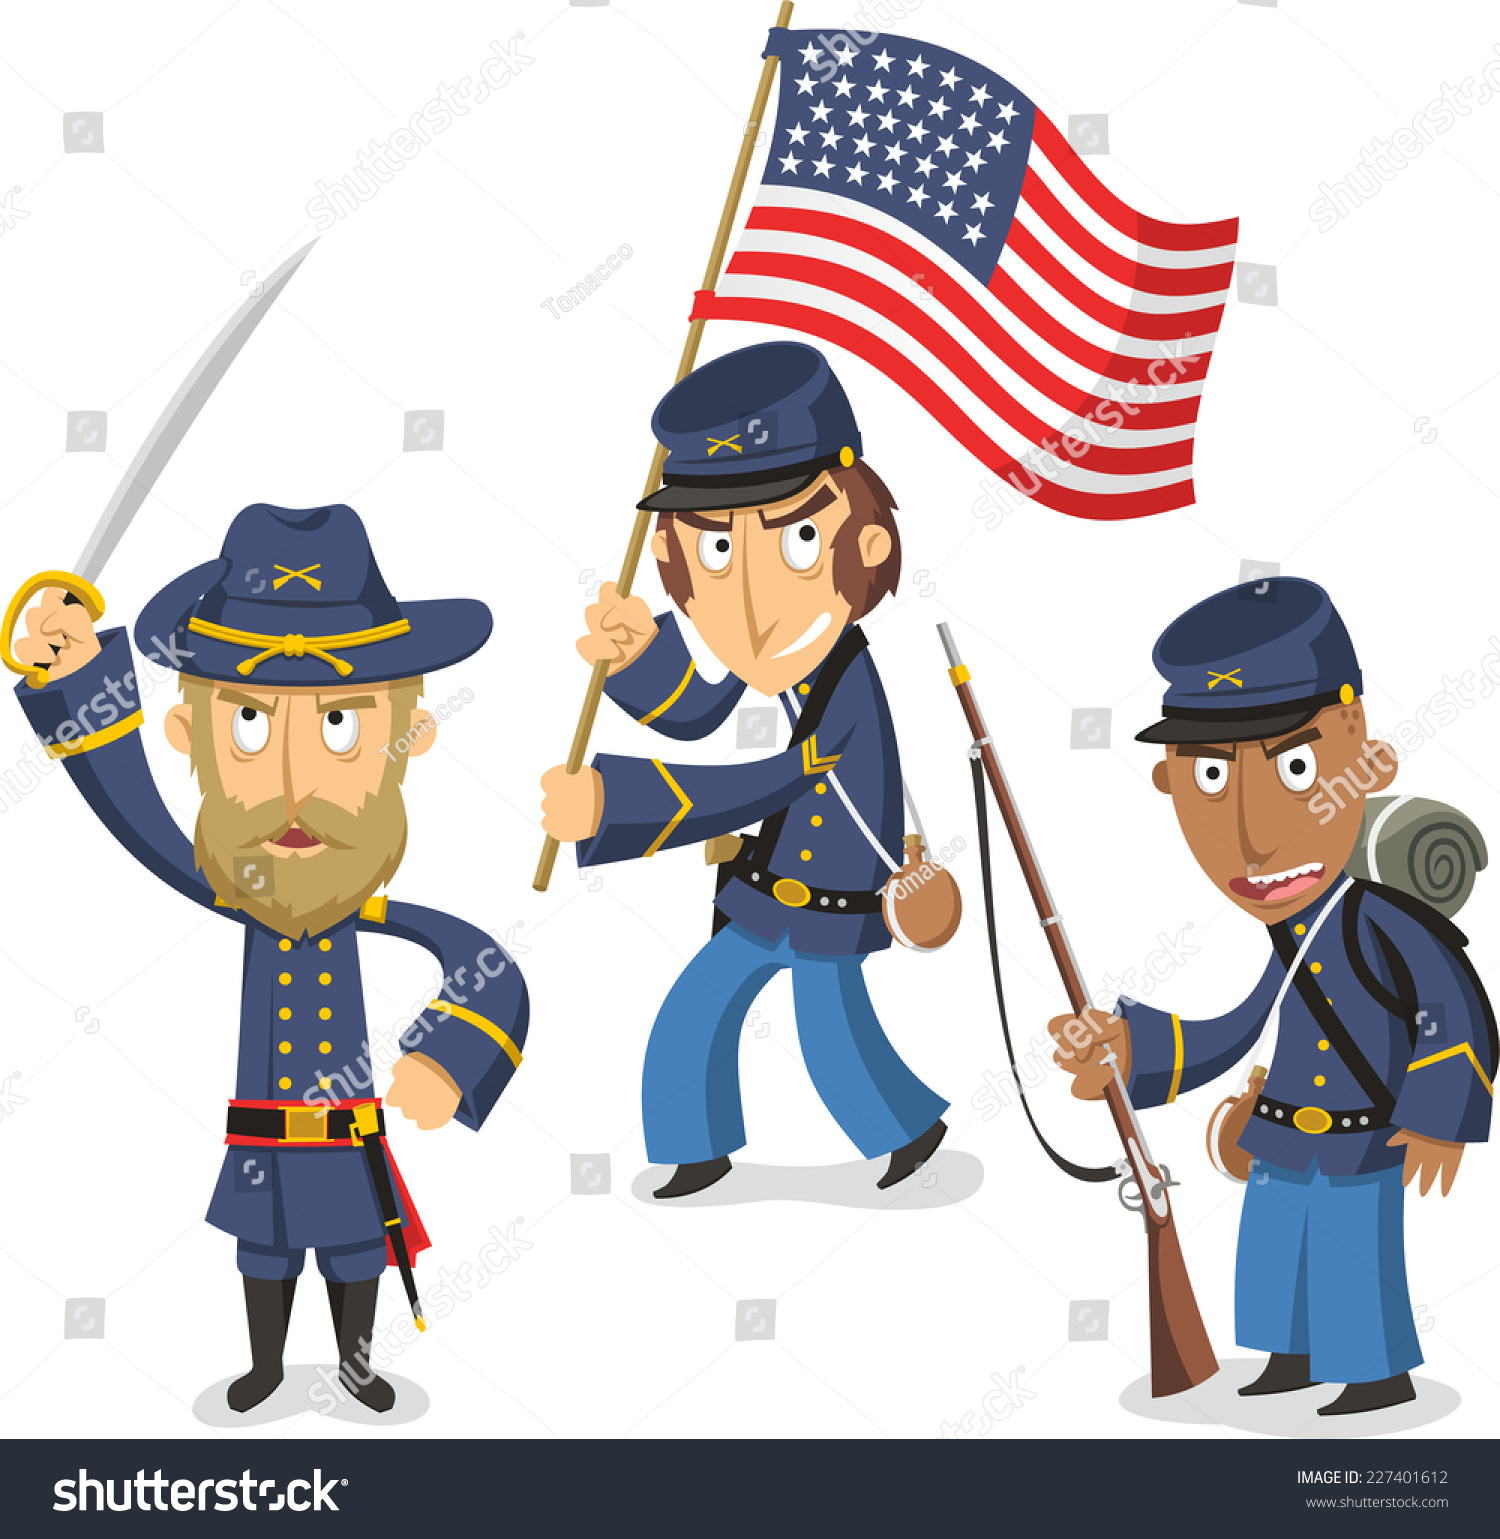 SVG of Confederacy Civil War America, vector illustration cartoon. svg